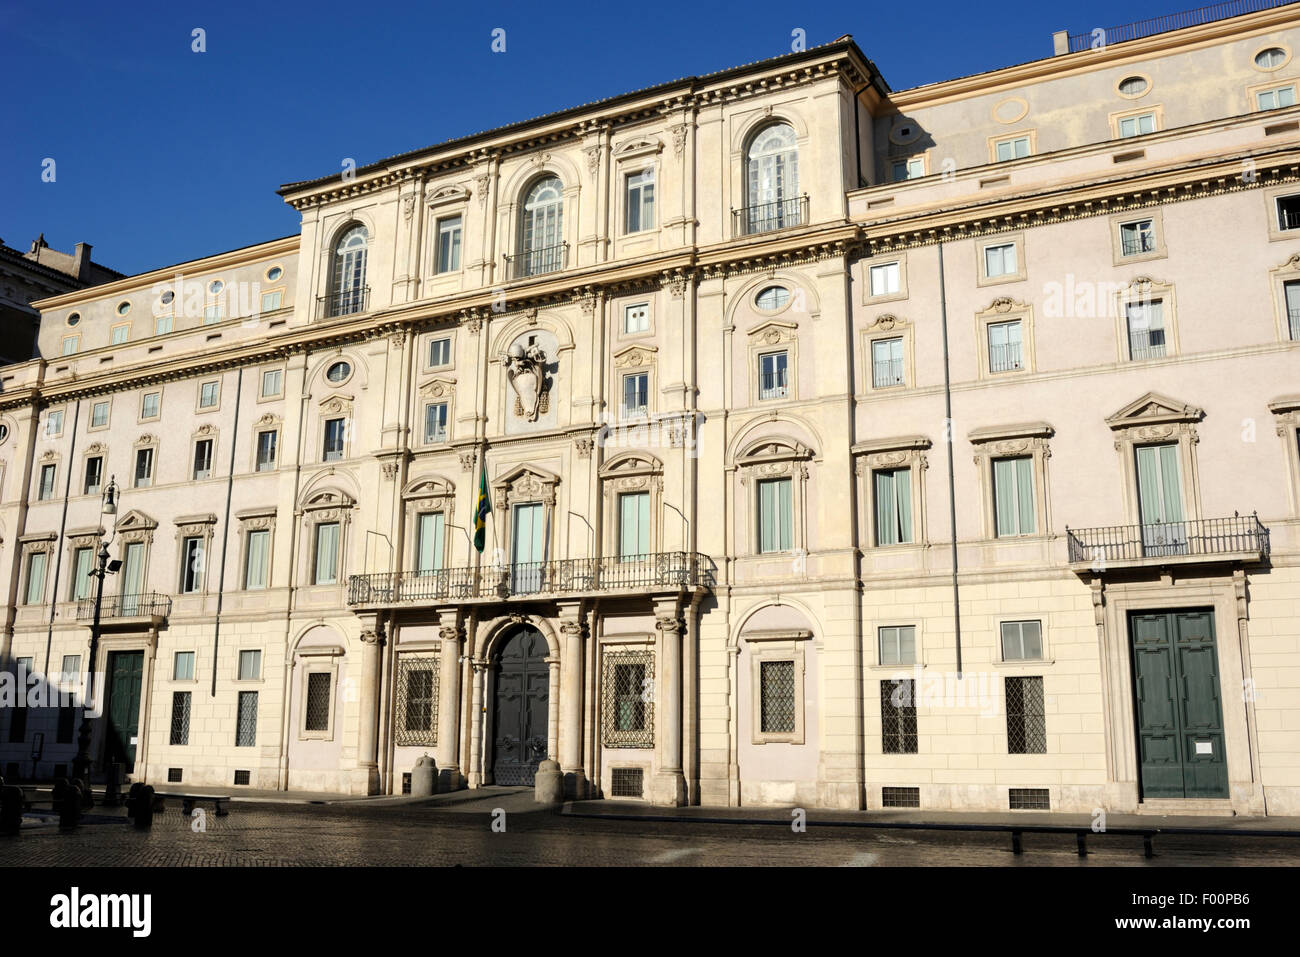 Italie, Rome, Piazza Navona, Palazzo Pamphilj, ambassade du brésil en Italie Banque D'Images